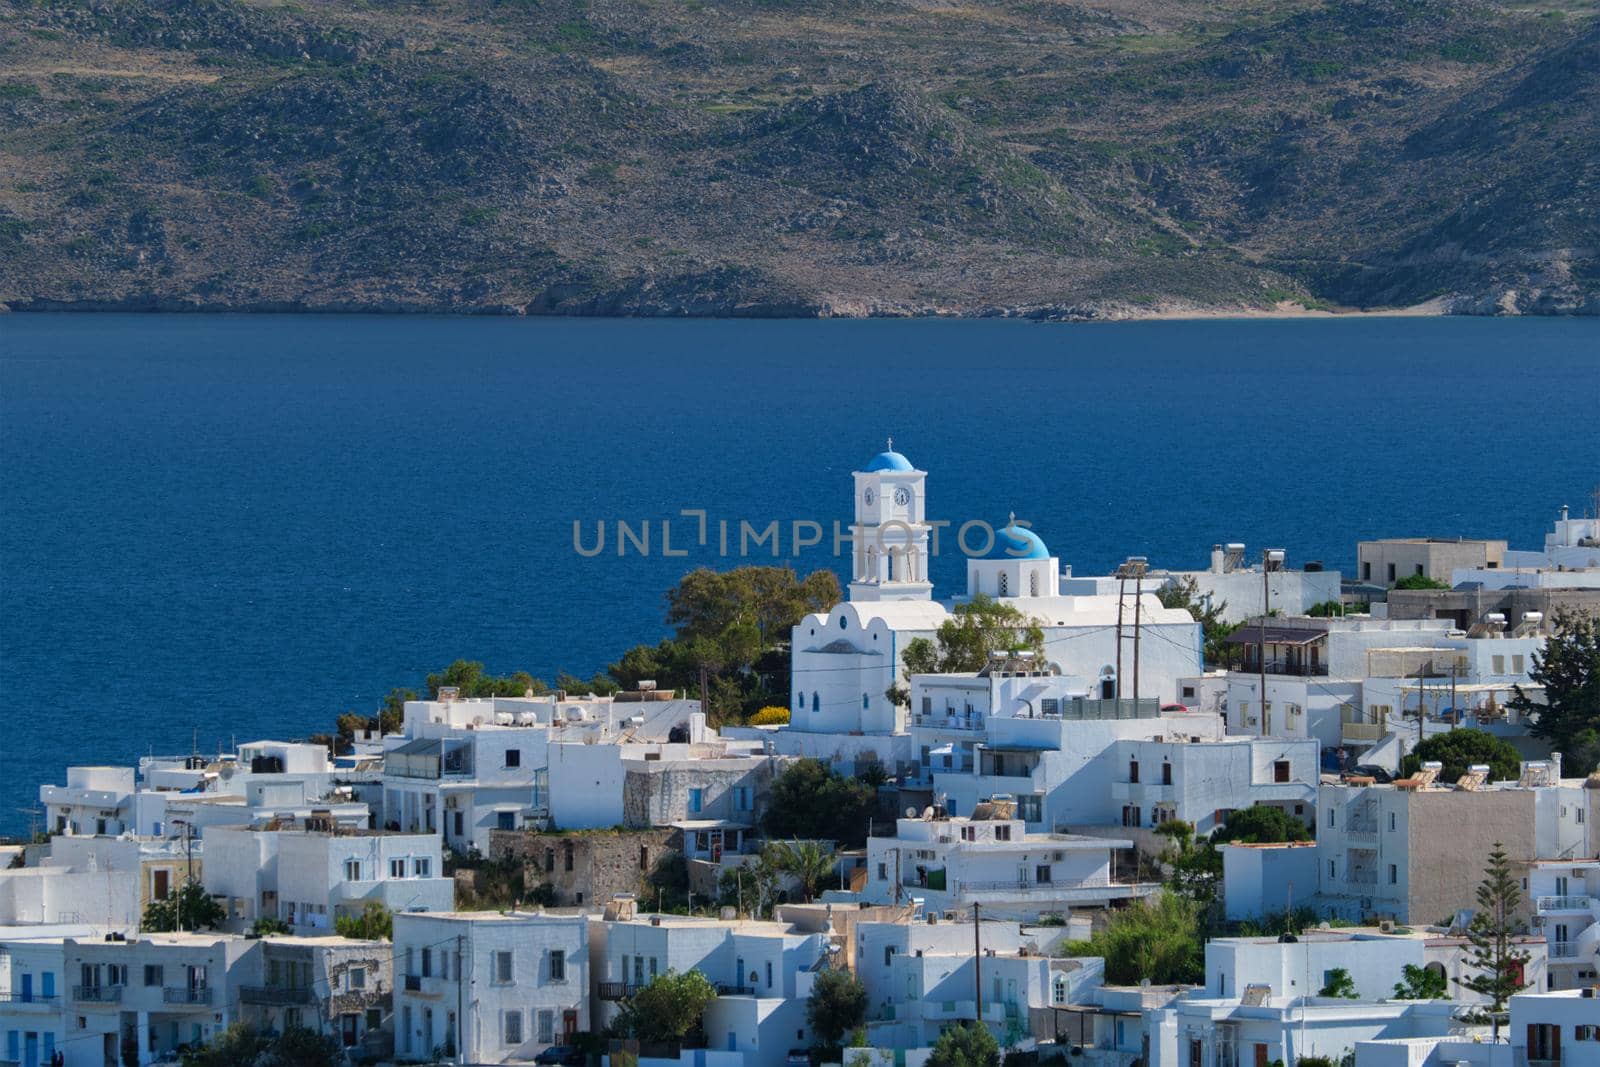 View of Plaka village with traditional Greek church. Milos island, Greece by dimol